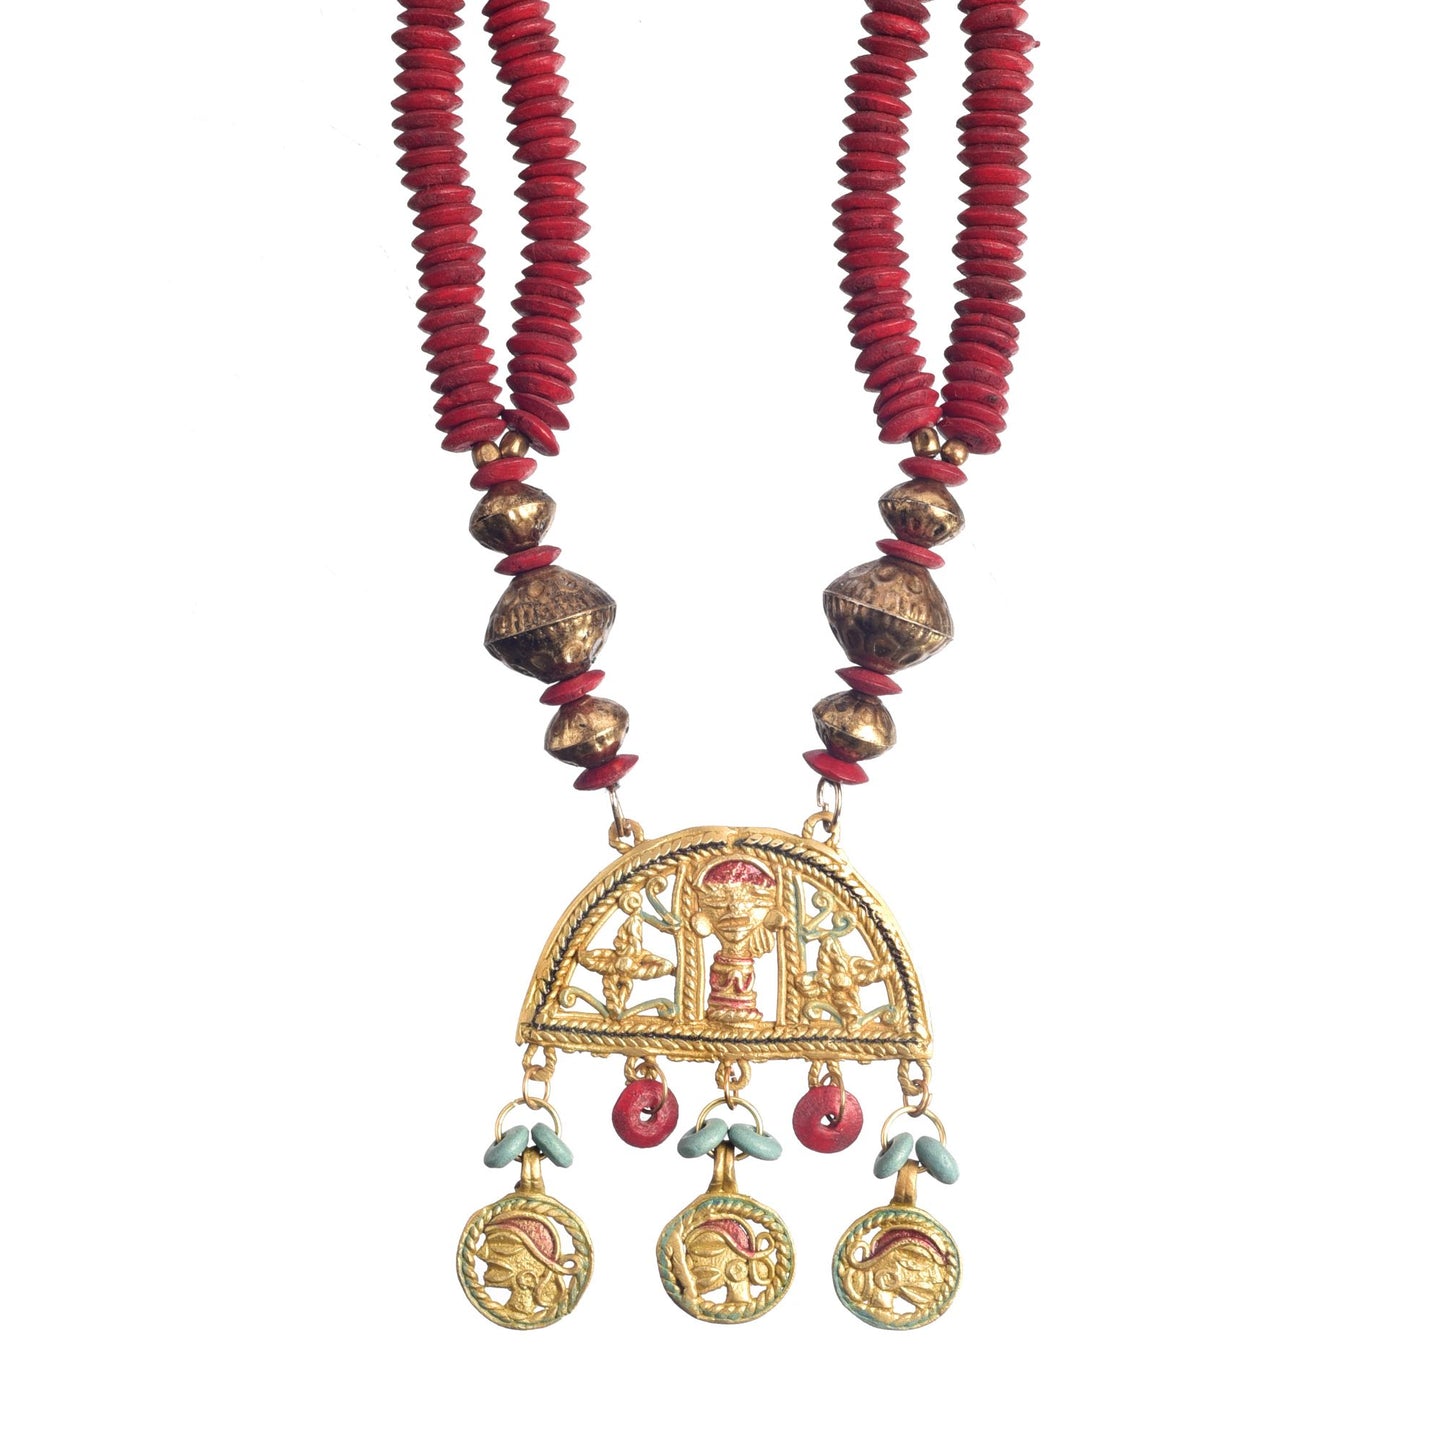 The Queen's Loop Handcrafted Tribal Necklace